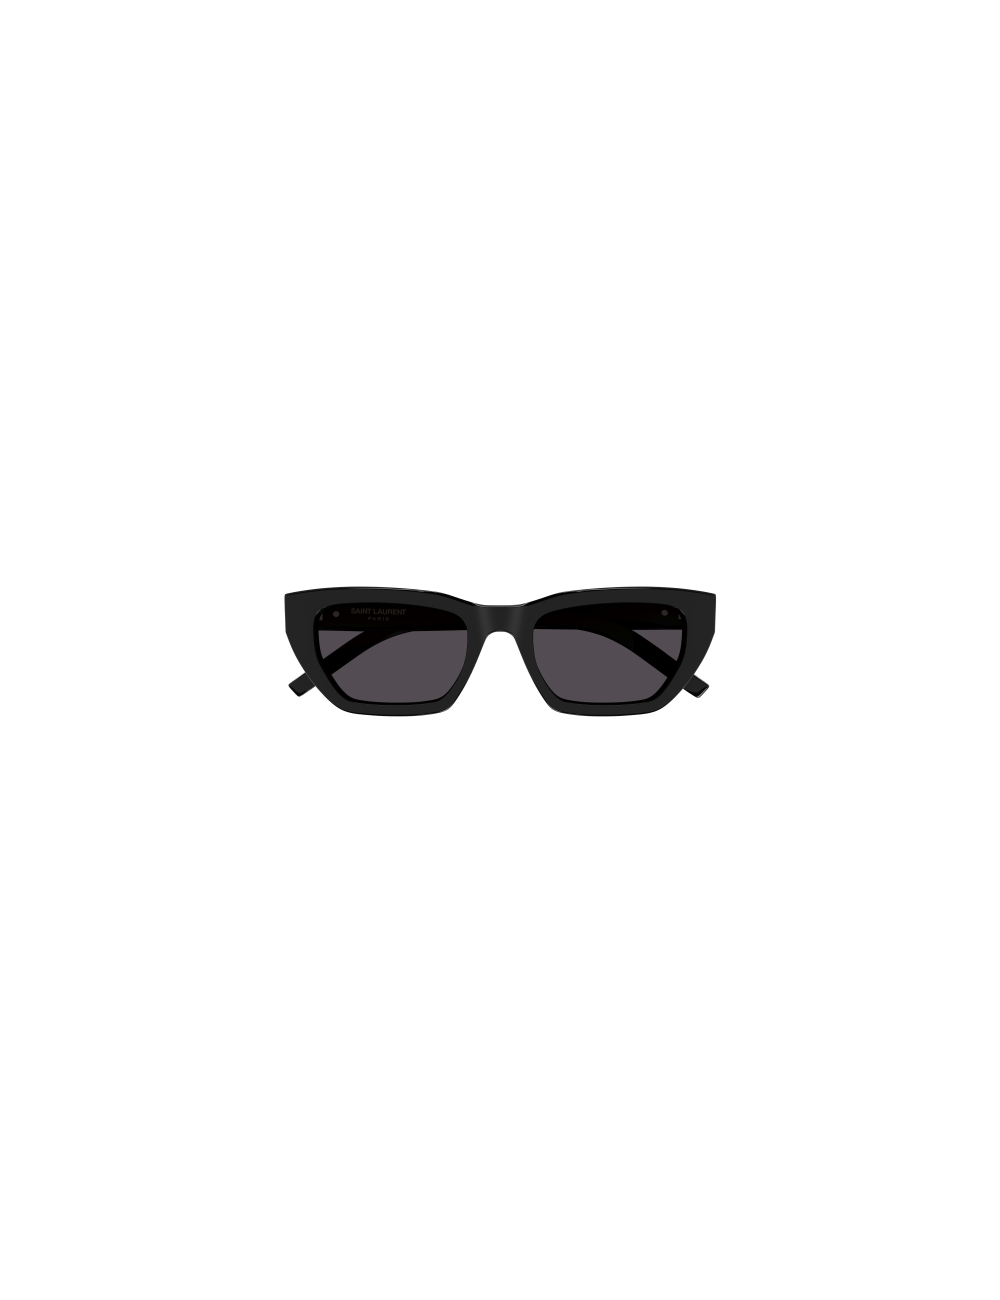 Saint Laurent SL M103 - 001 Black | Sunglasses Woman